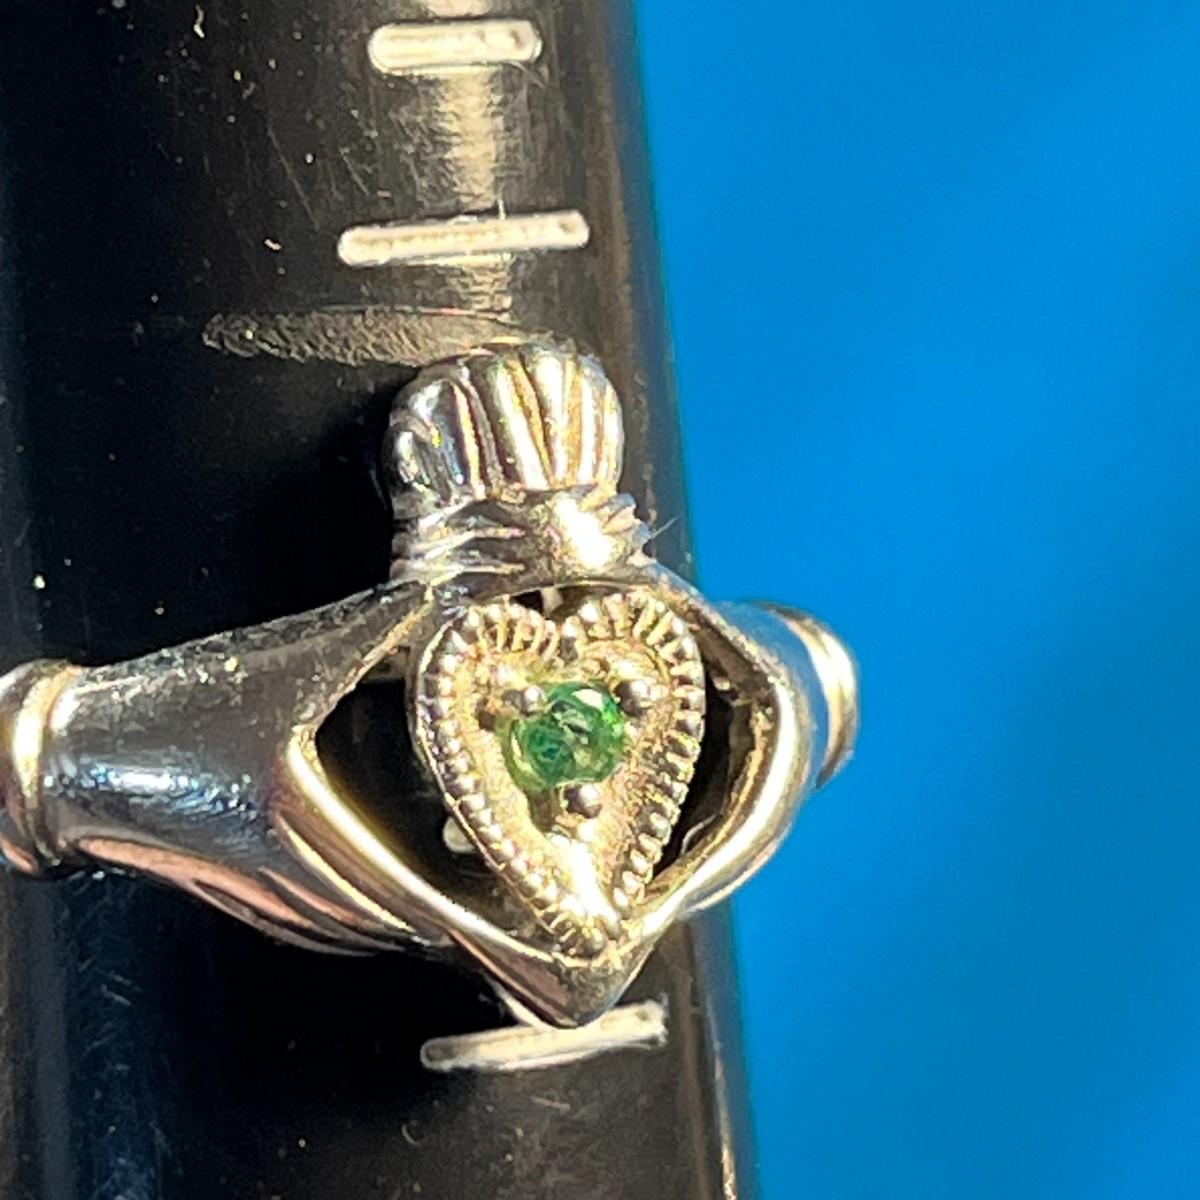 Claddagh Ring Black Heart Gem Sterling Silver Gothic Skull Engagement Ring  | eBay